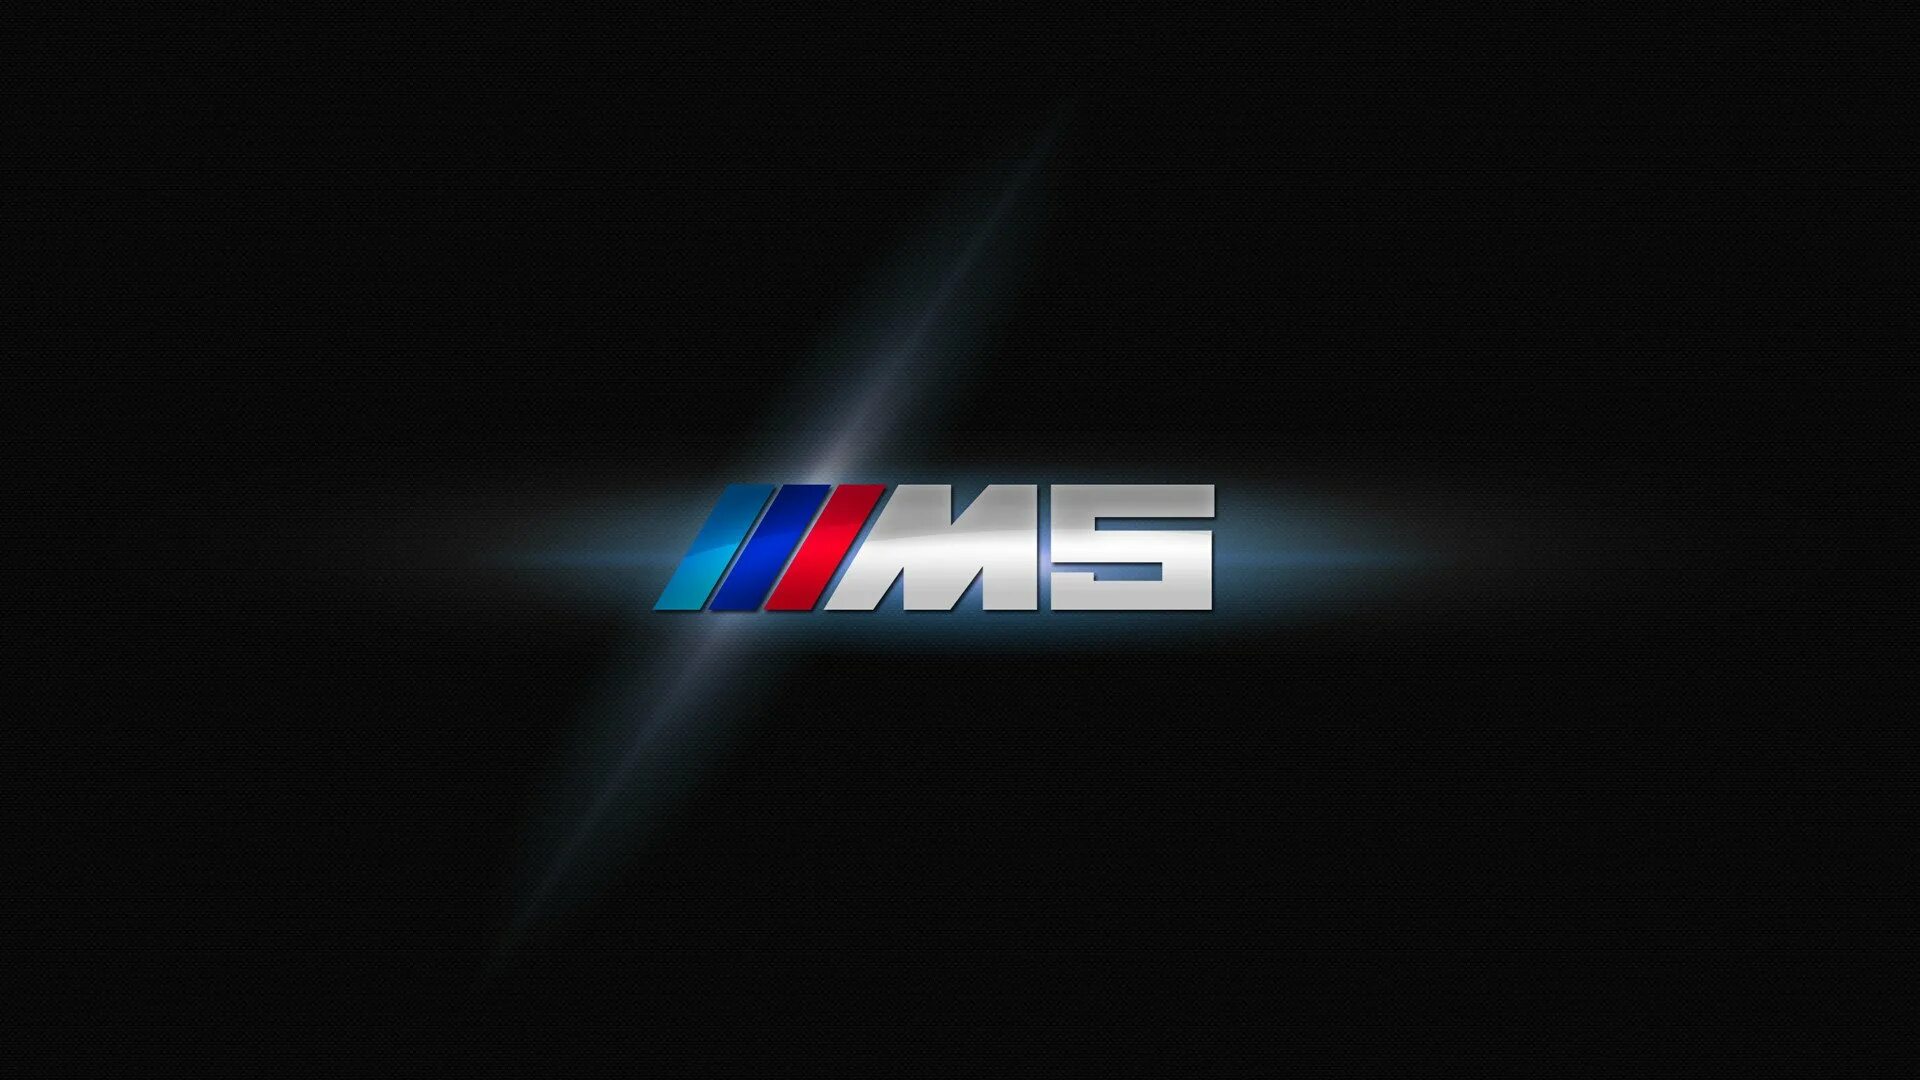 Bmw m power. BMW m5 logo. BMW M Power m5 логотип. BMW m5 шильдик.